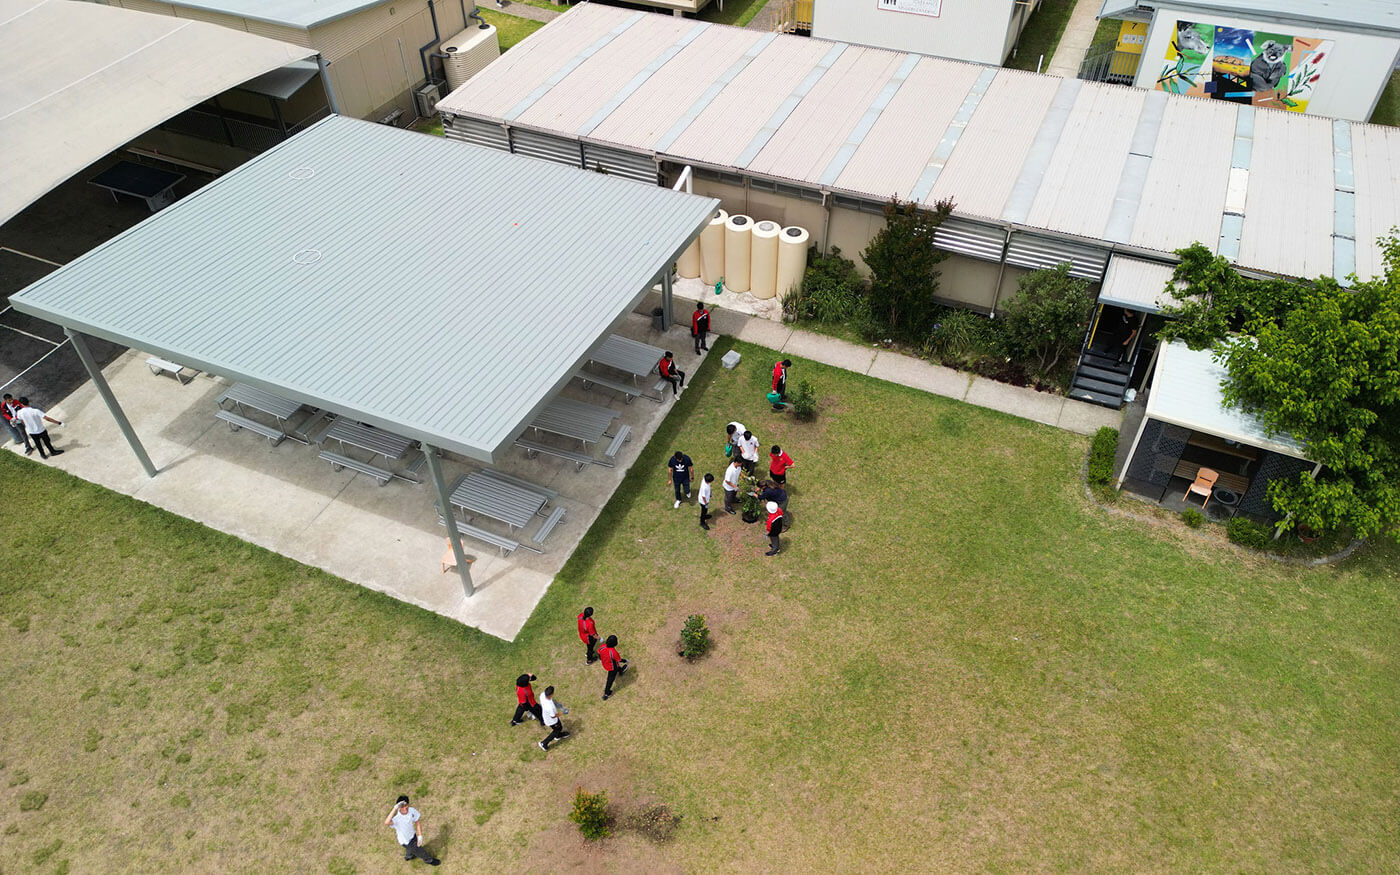 Aerial view of school